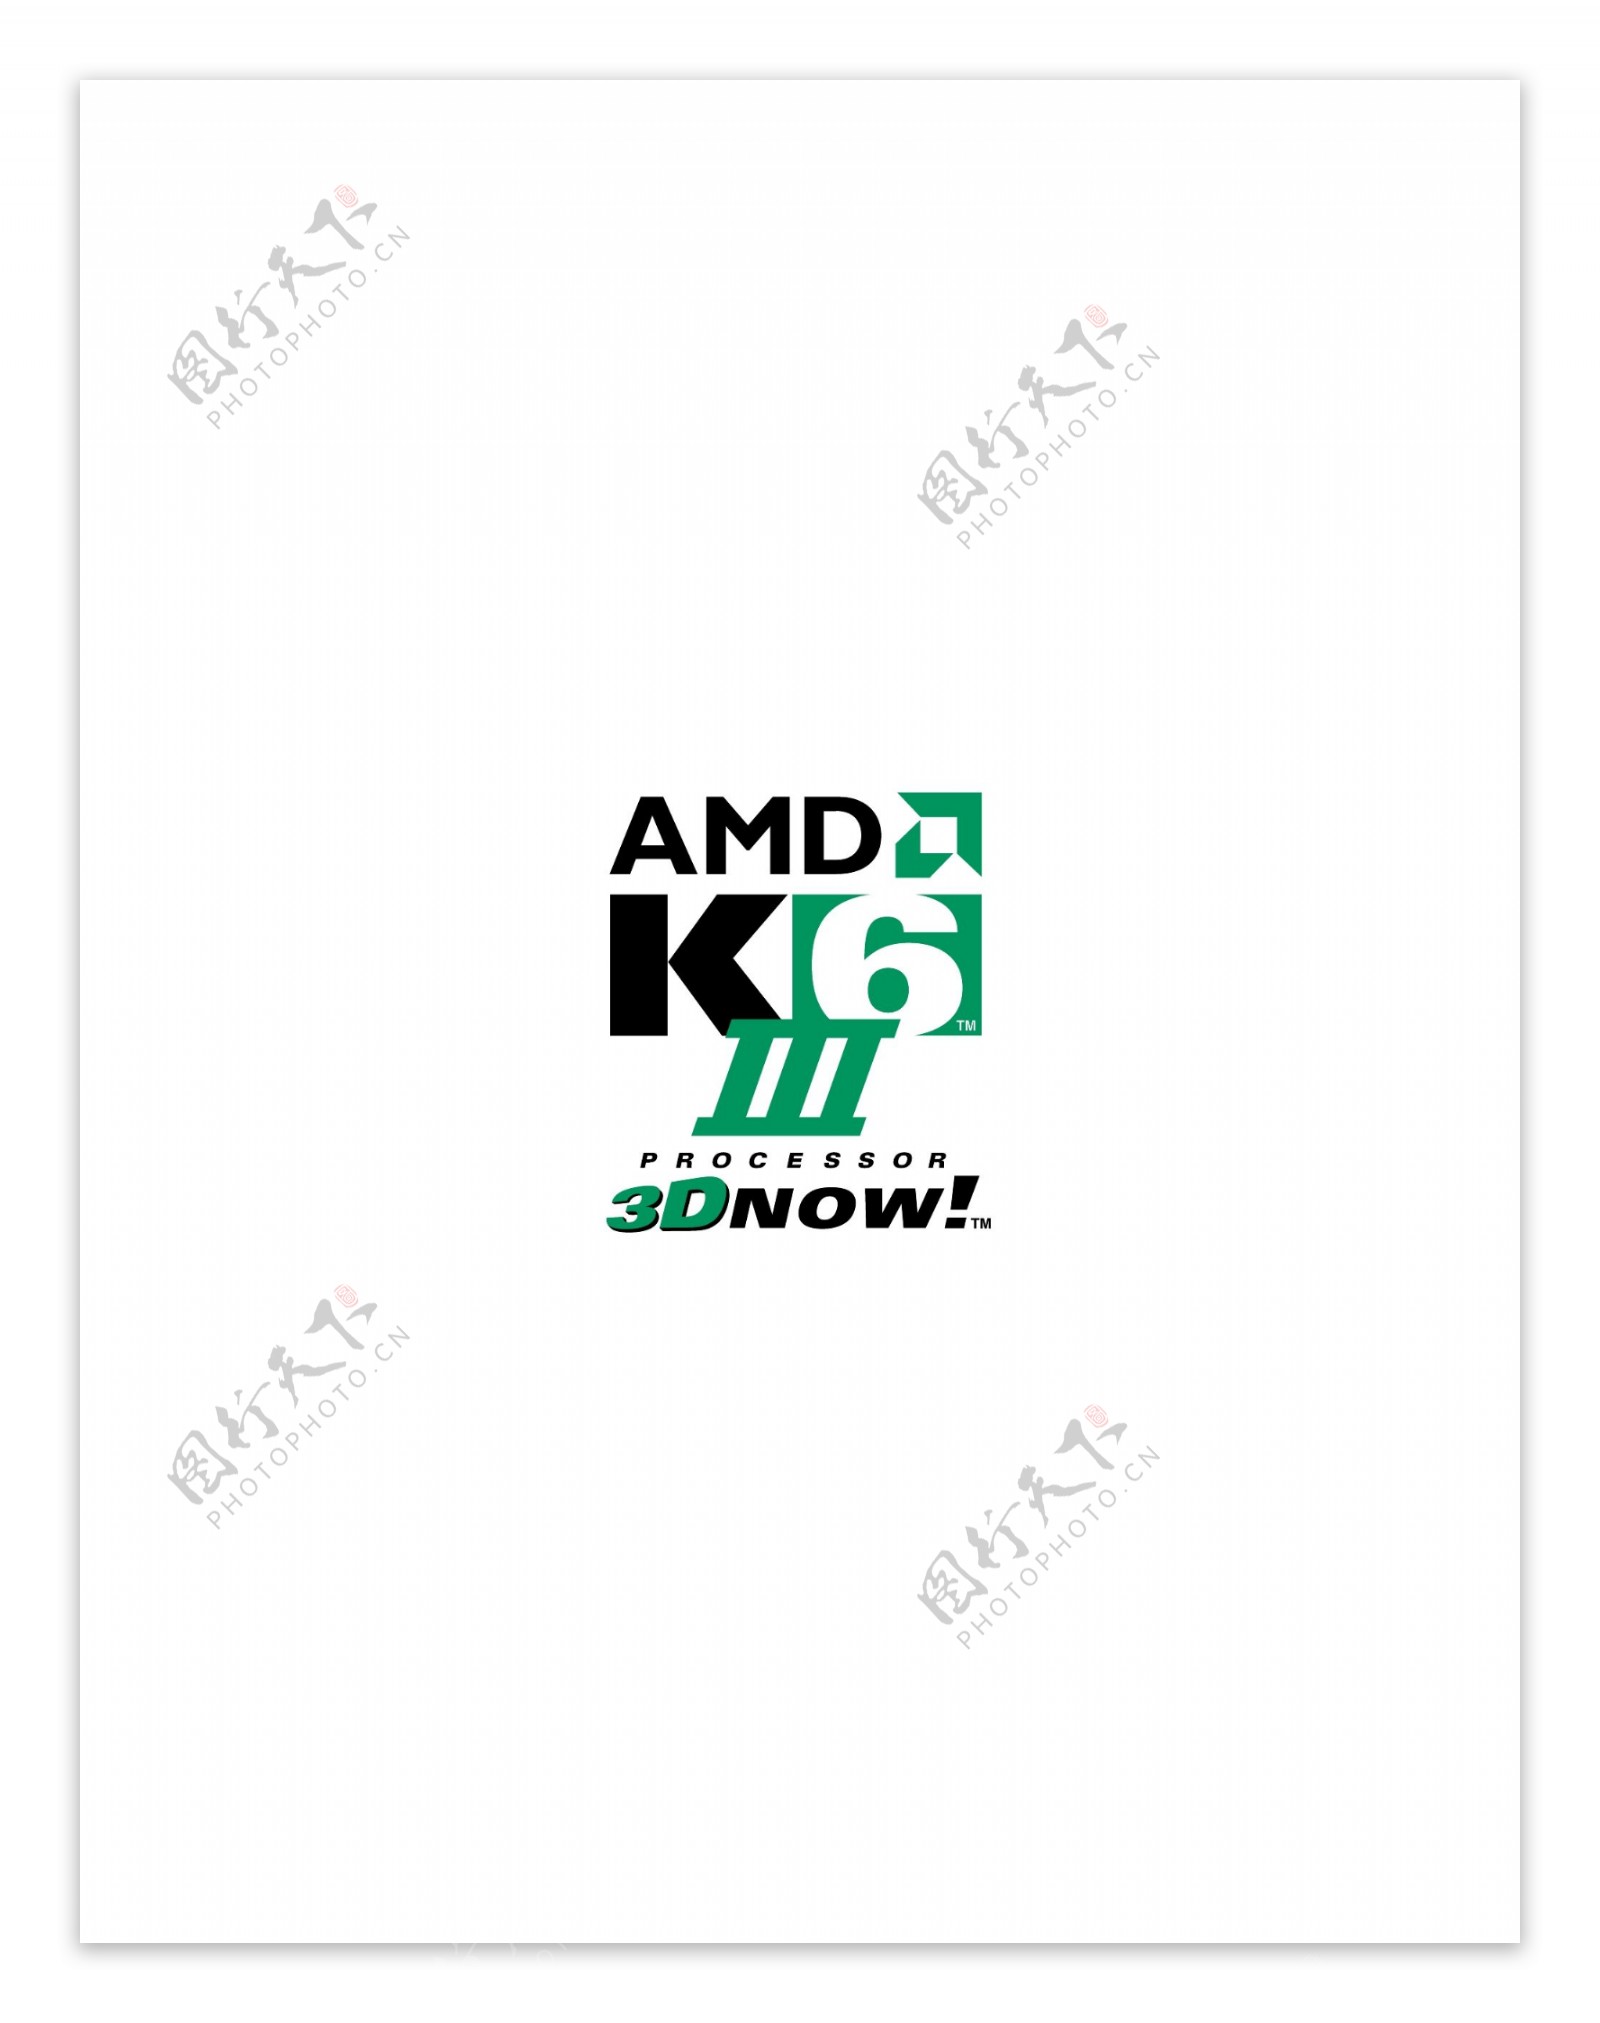 AMDK6IIIProcessorlogo设计欣赏IT高科技公司标志AMDK6IIIProcessor下载标志设计欣赏